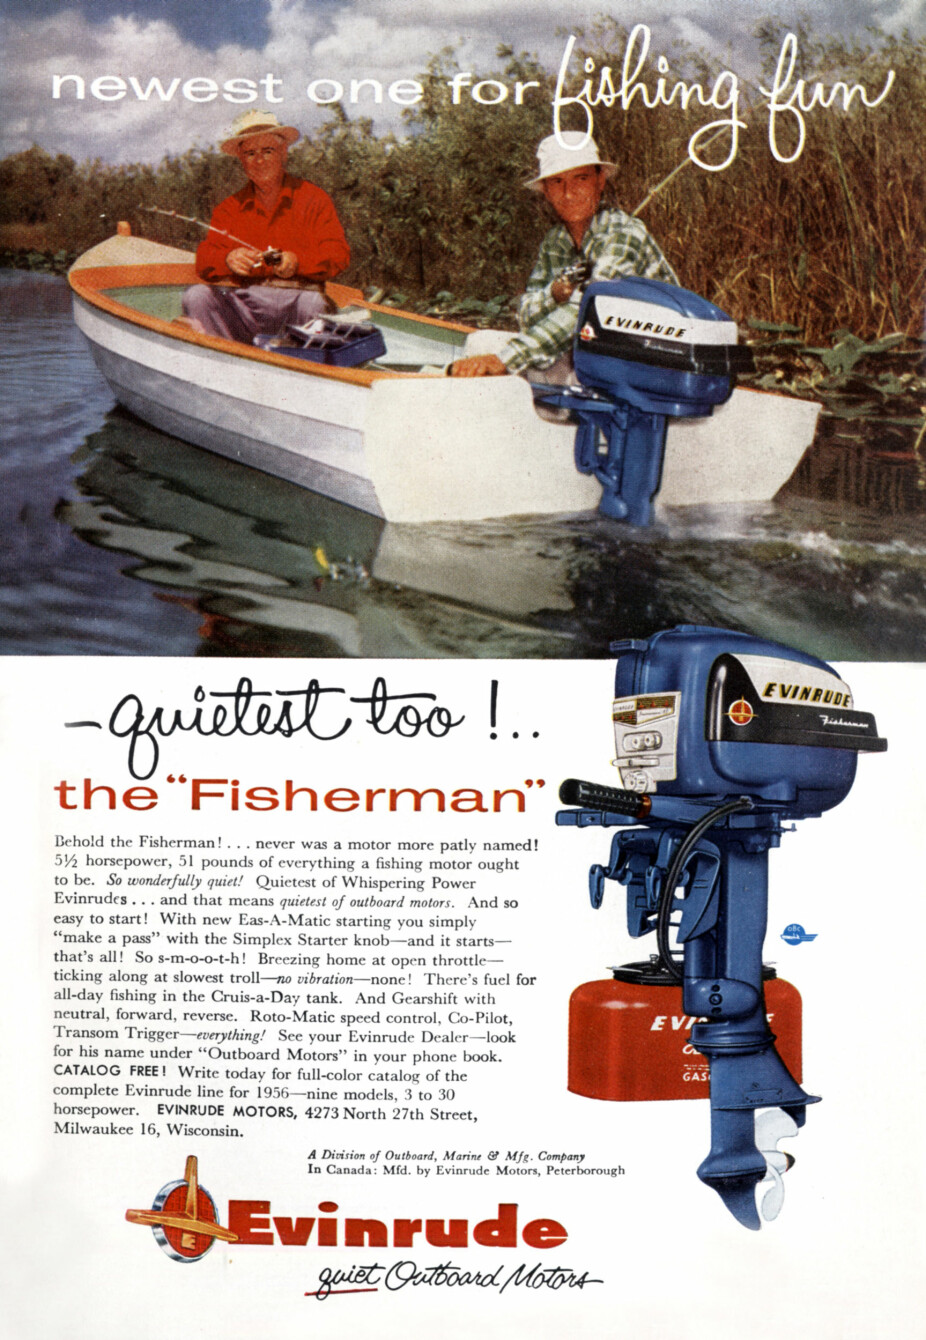 <b>DEN STILLESTE OGSÅ:</b> Reklame for «the Fisherman» cirka 1956.